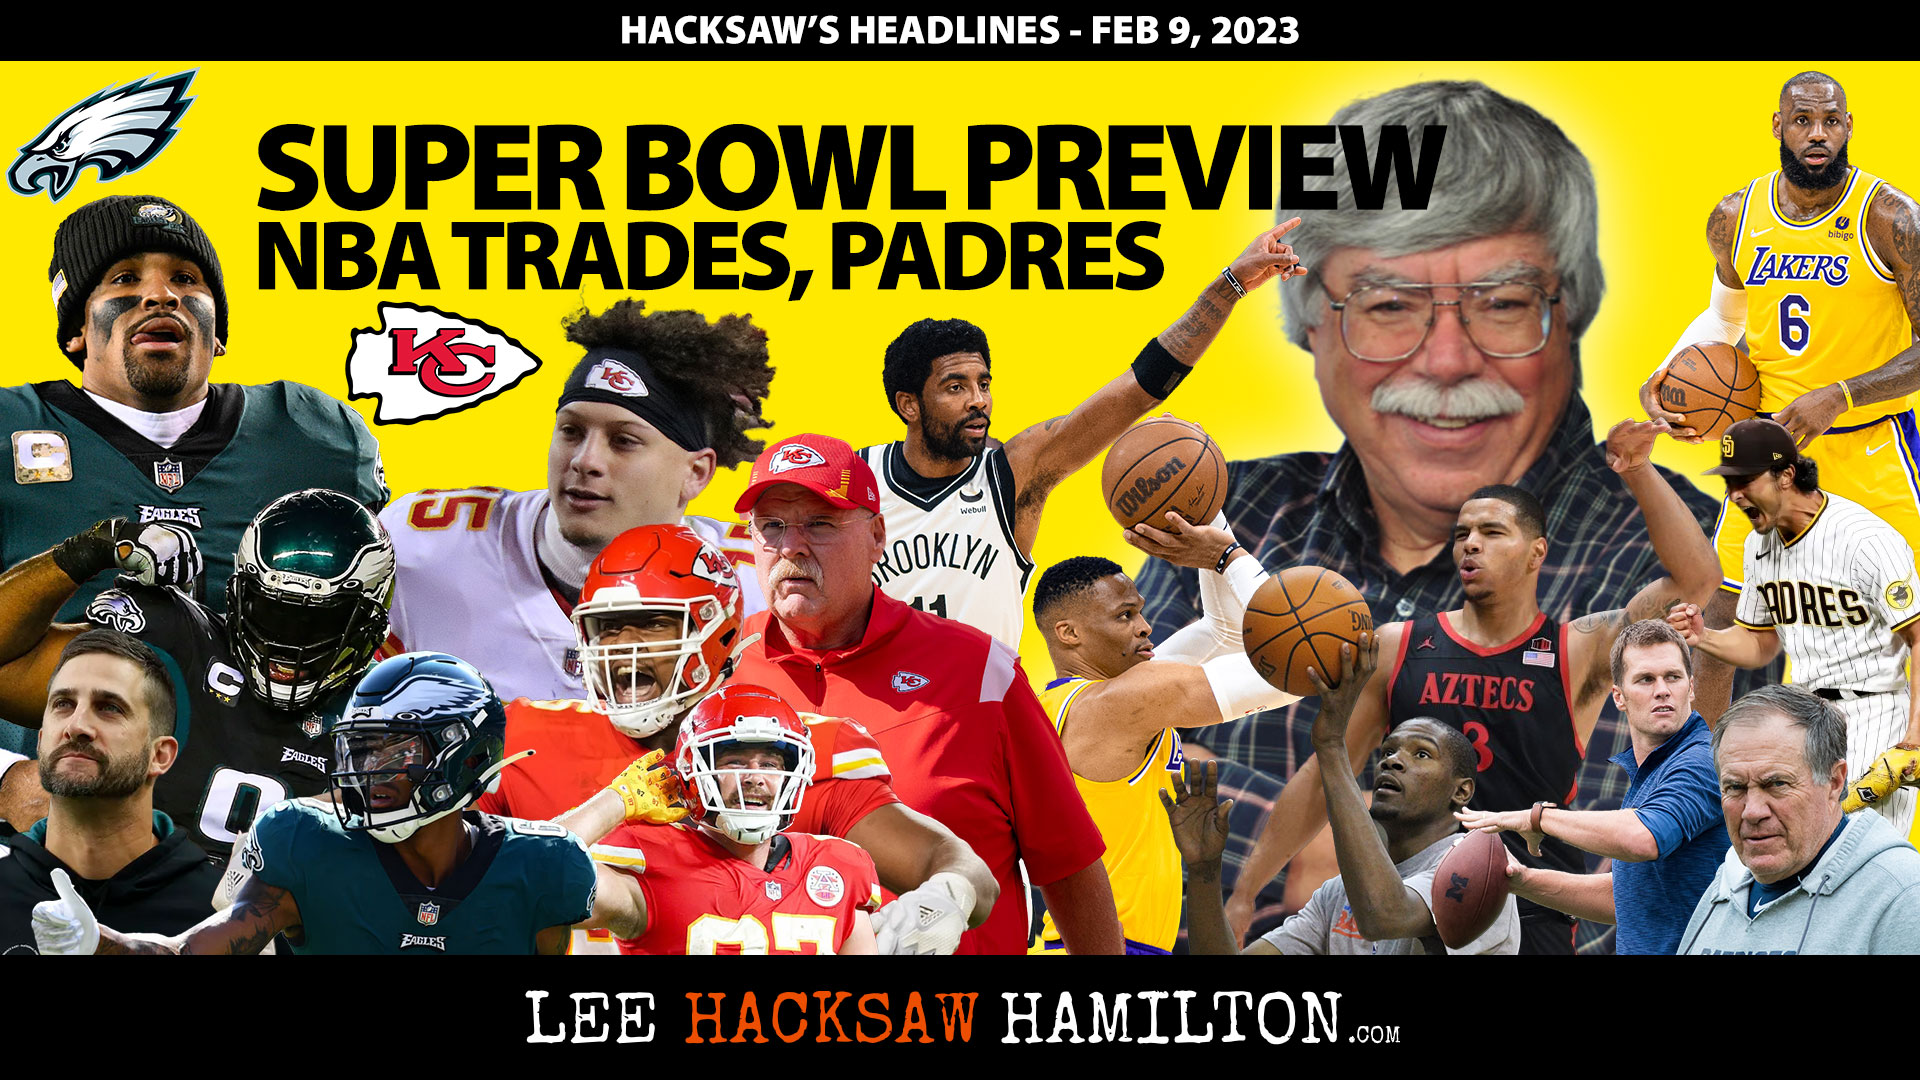 Super Bowl Preview, NBA Trades, LeBron James, Padres, Lee Hacksaw Hamilton